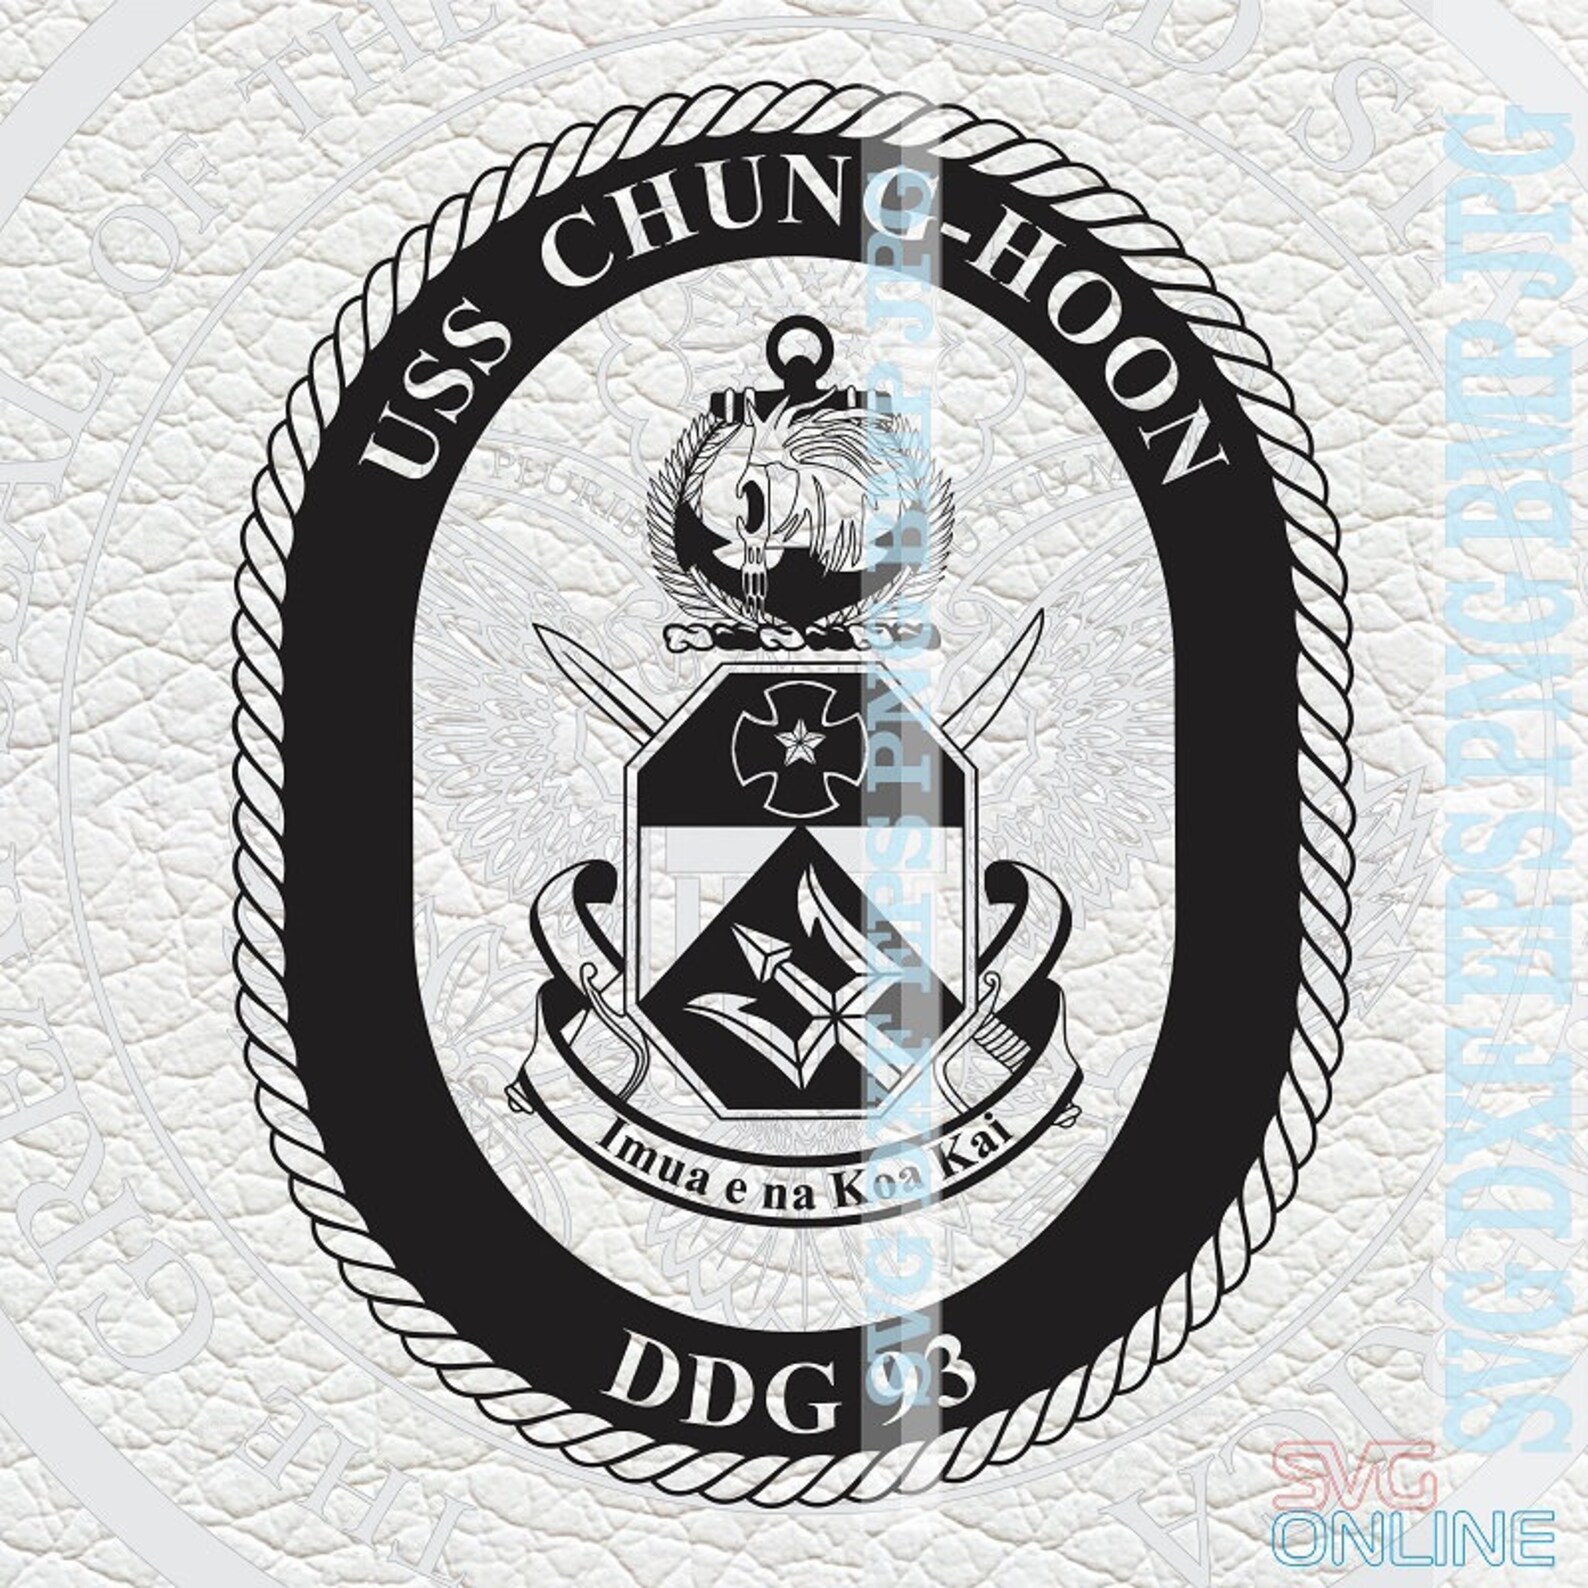 USS Chung-hoon DDG 93 SVG Dxf Png Clipart Vector Cricut Cut - Etsy